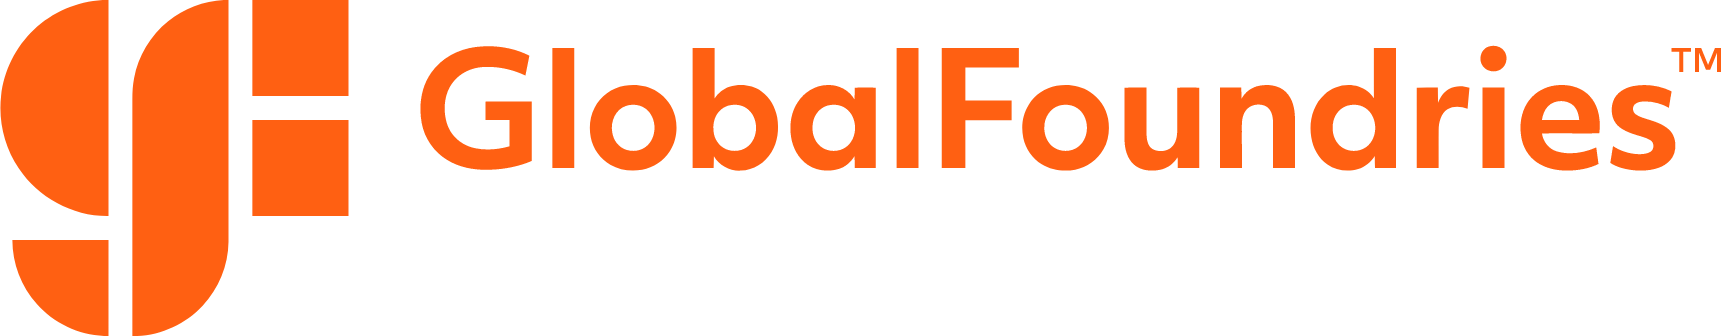 GlobalFoundries logo large (transparent PNG)